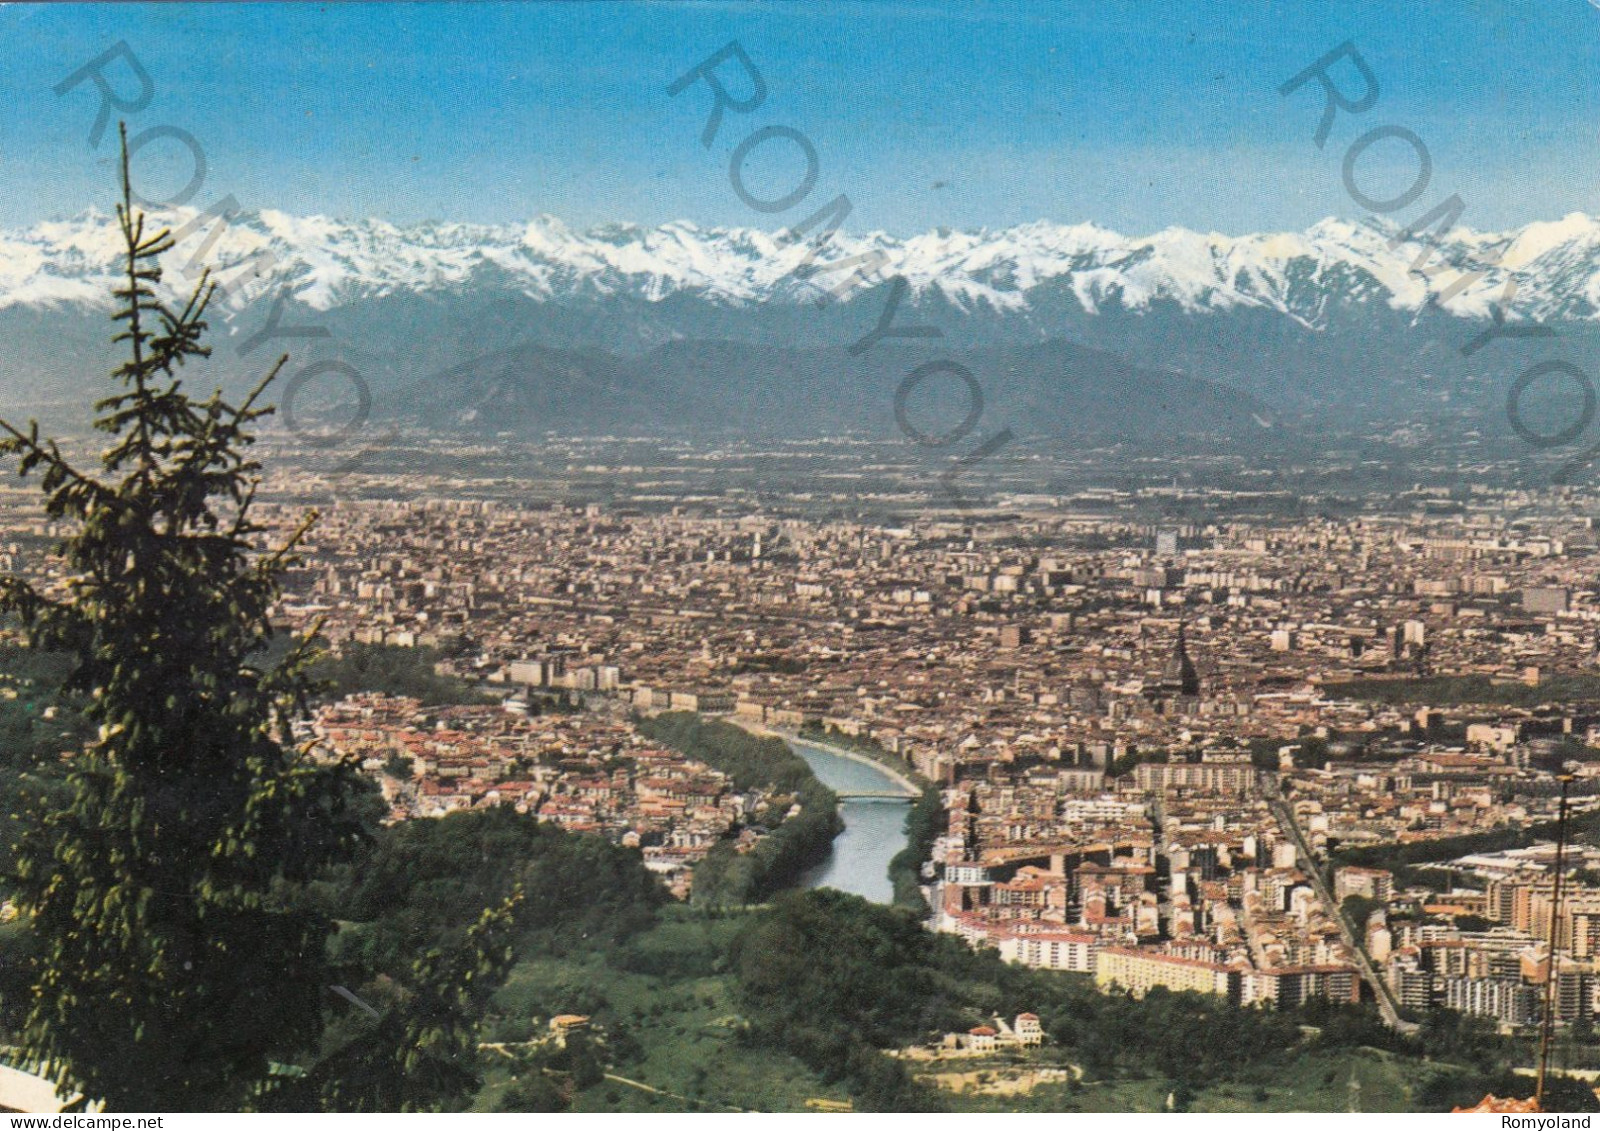 CARTOLINA  B15 TORINO,PIEMONTE-PANORAMA-STORIA,CULTURA,MEMORIA,RELIGIONE,IMPERO ROMANO,BELLA ITALIA,VIAGGIATA 1976 - Multi-vues, Vues Panoramiques